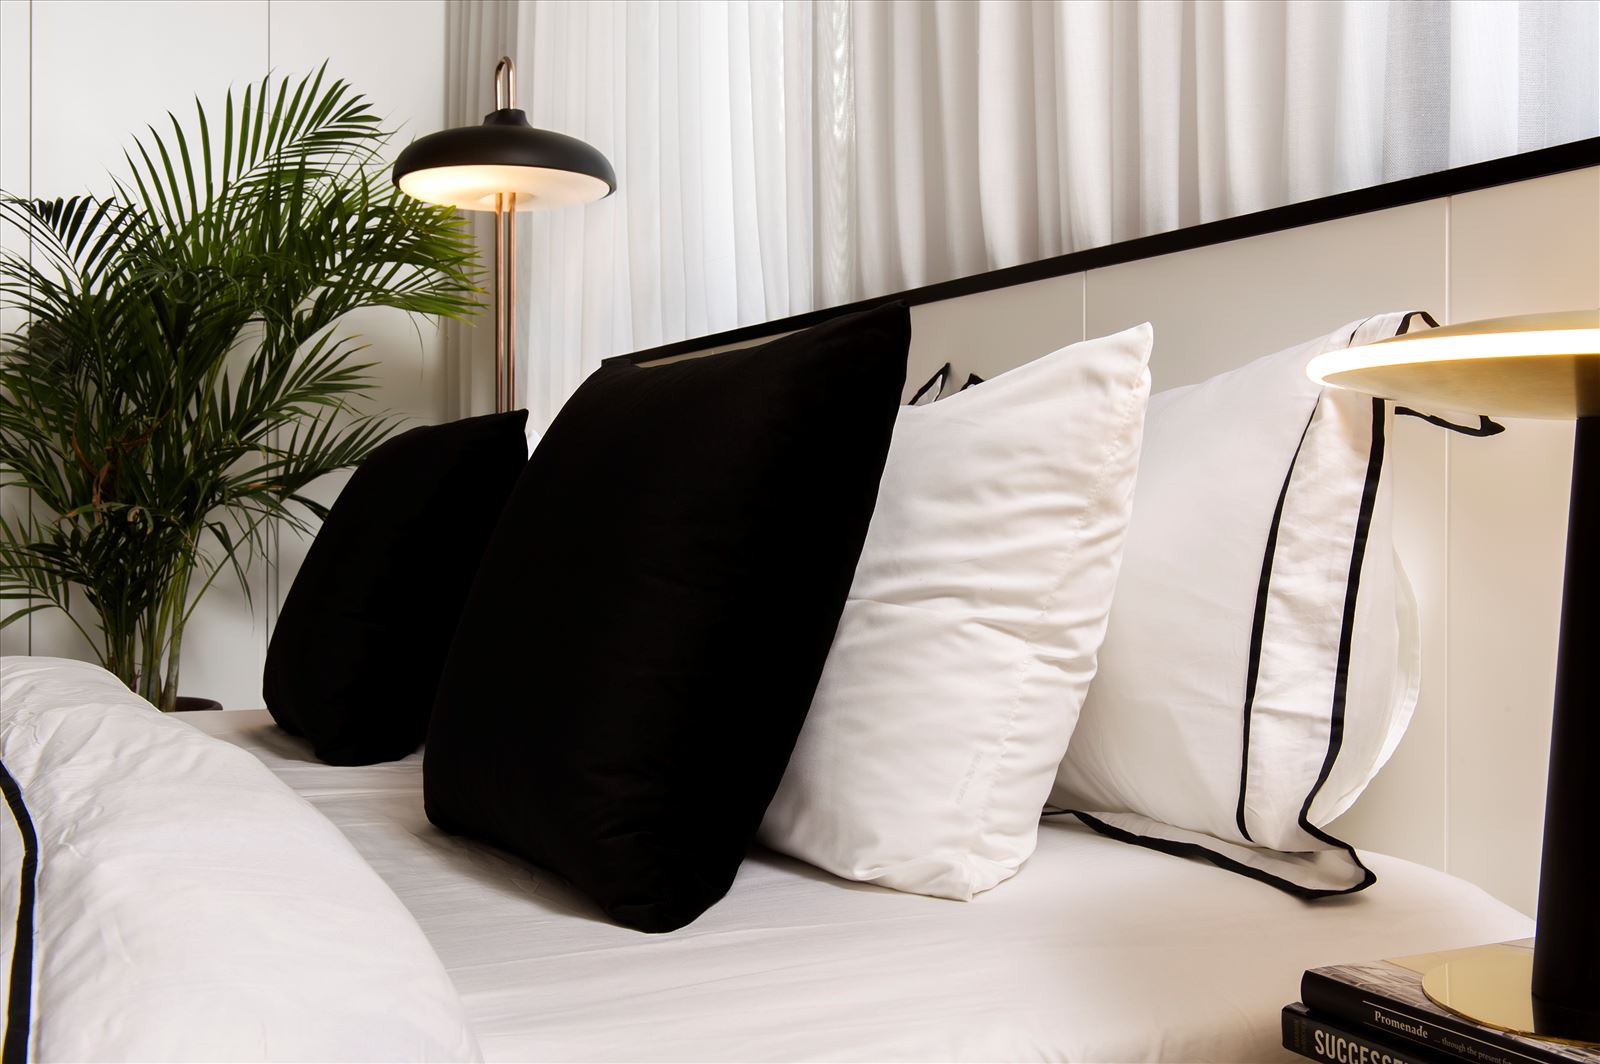 Penthouse - Petah Tikva גוף תאורה בחדר השינה בעיצוב של דורי קמחי